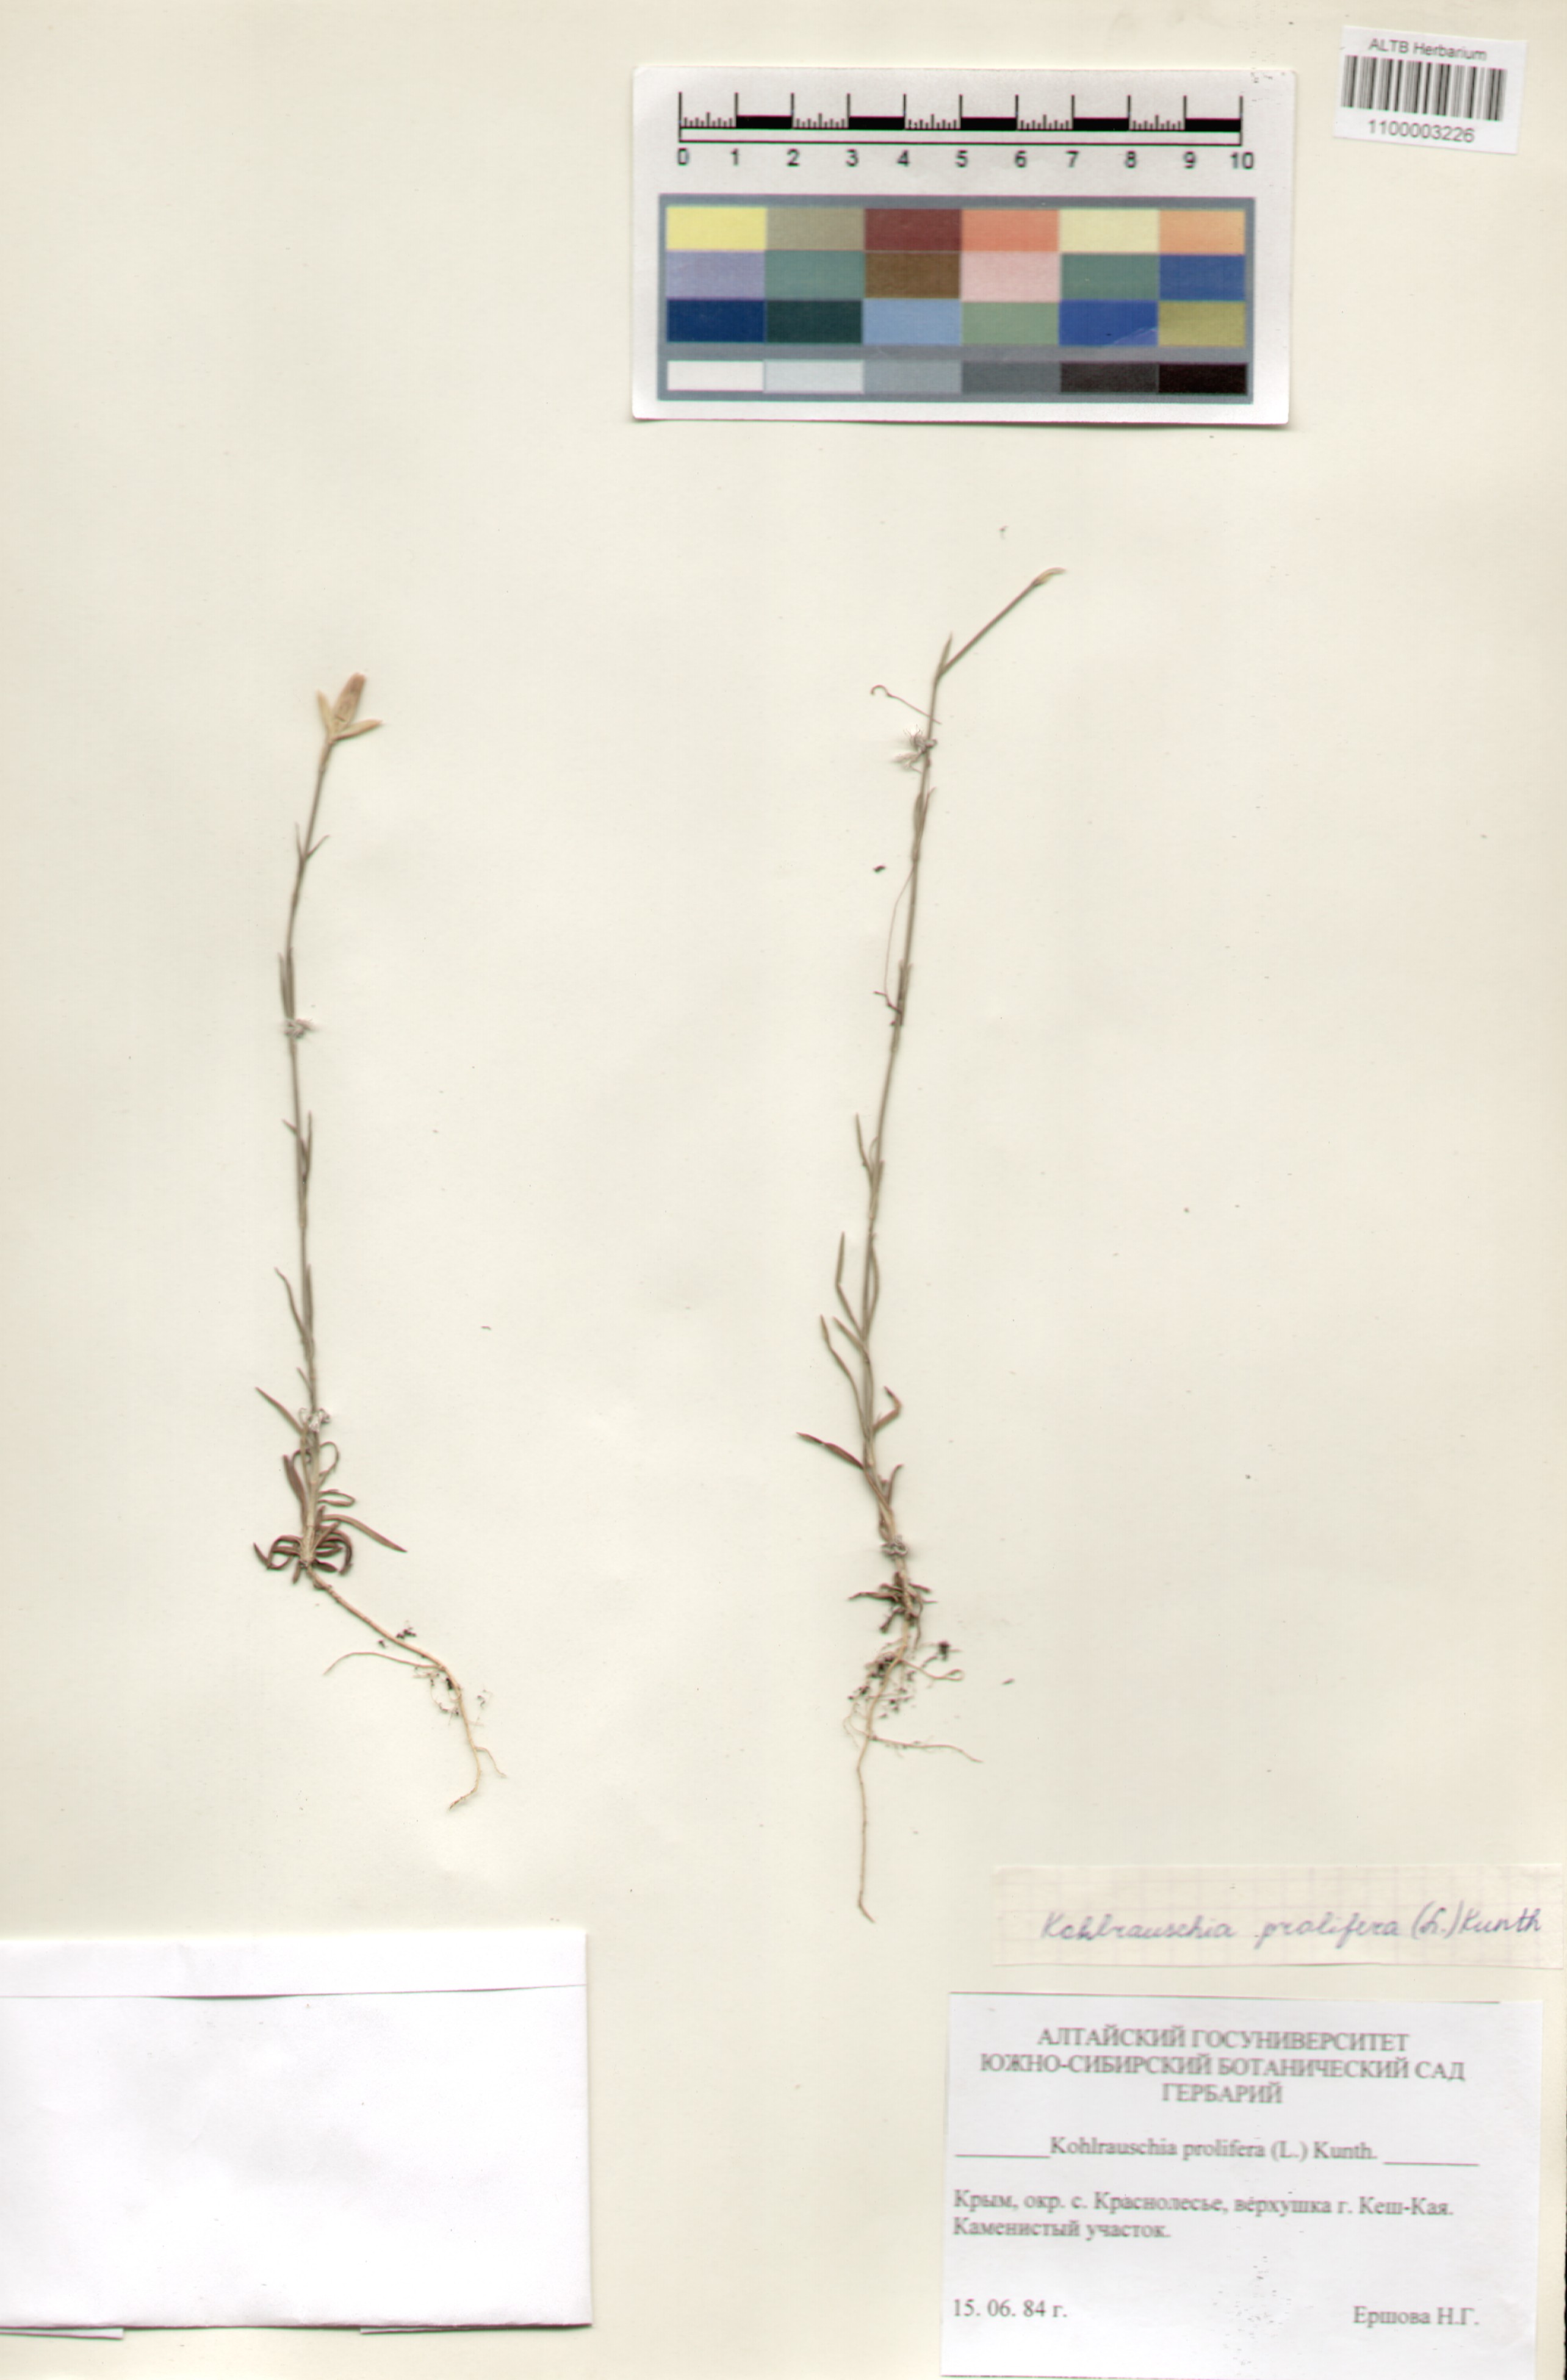 Caryophyllaceae,Kohlrauschia prolifera (L.) Kunth.